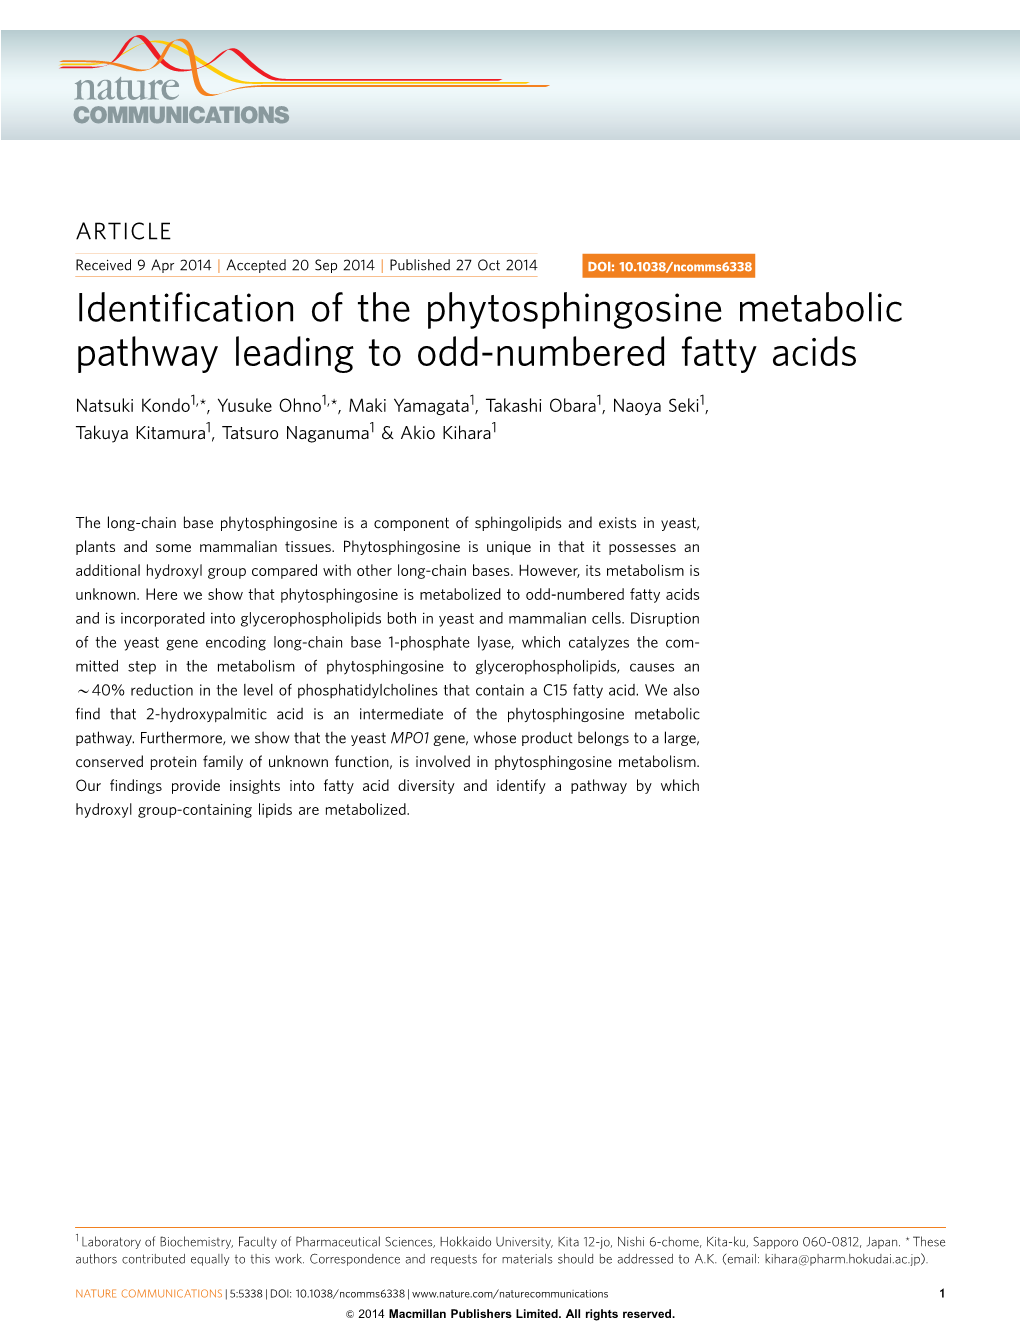 Identification of the Phytosphingosine Metabolic Pathway Leading to Odd